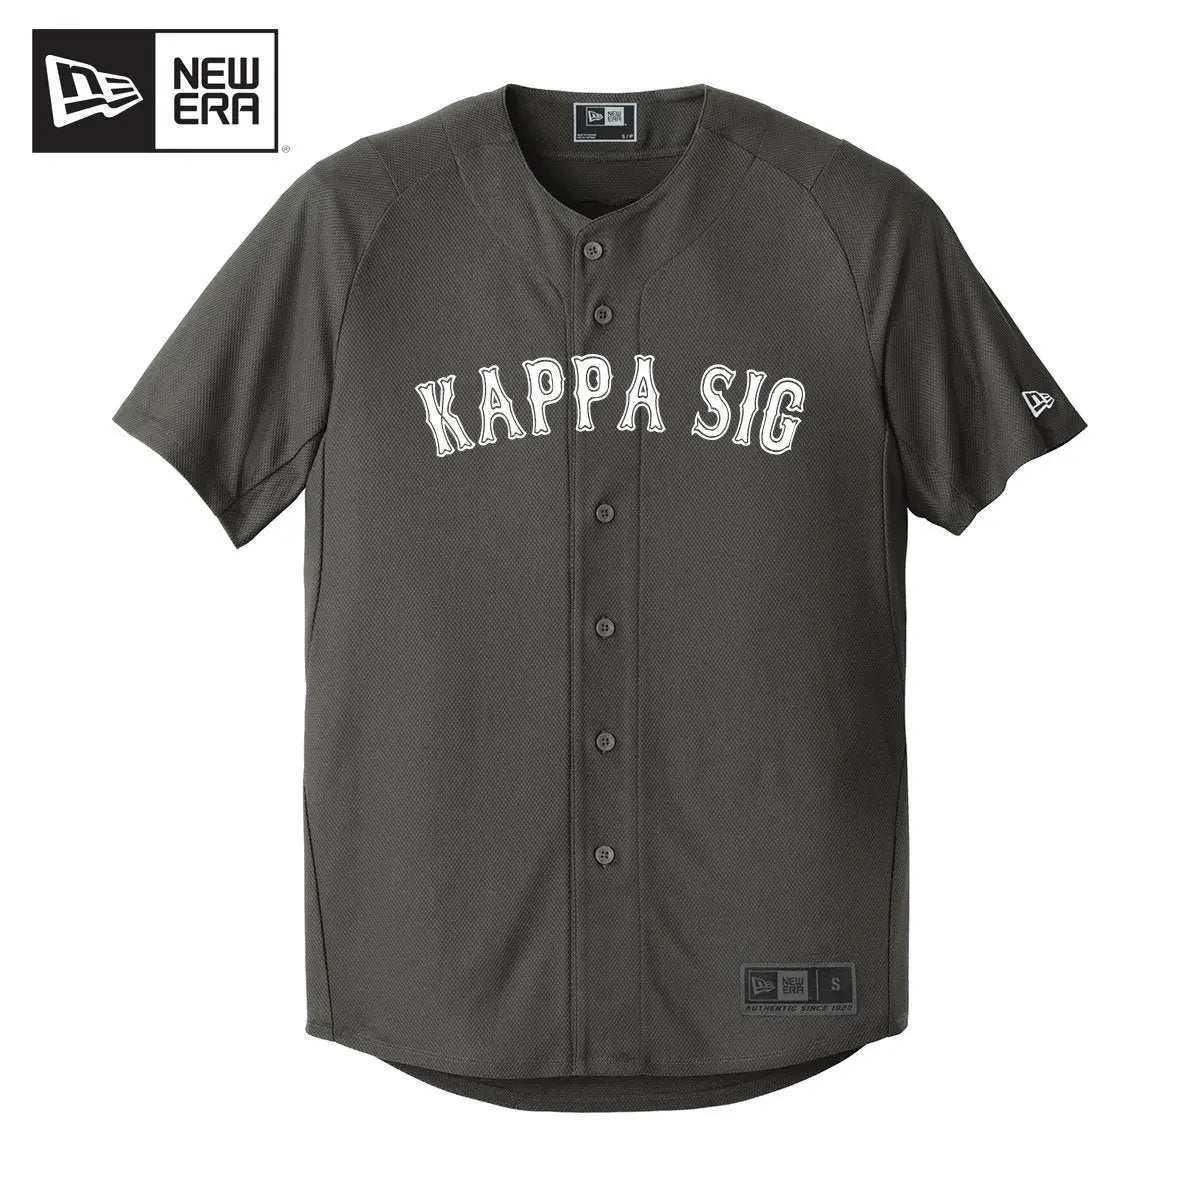 Langwerpig paus Mis Kappa Sig New Era Graphite Baseball Jersey – Kappa Sigma Official Store